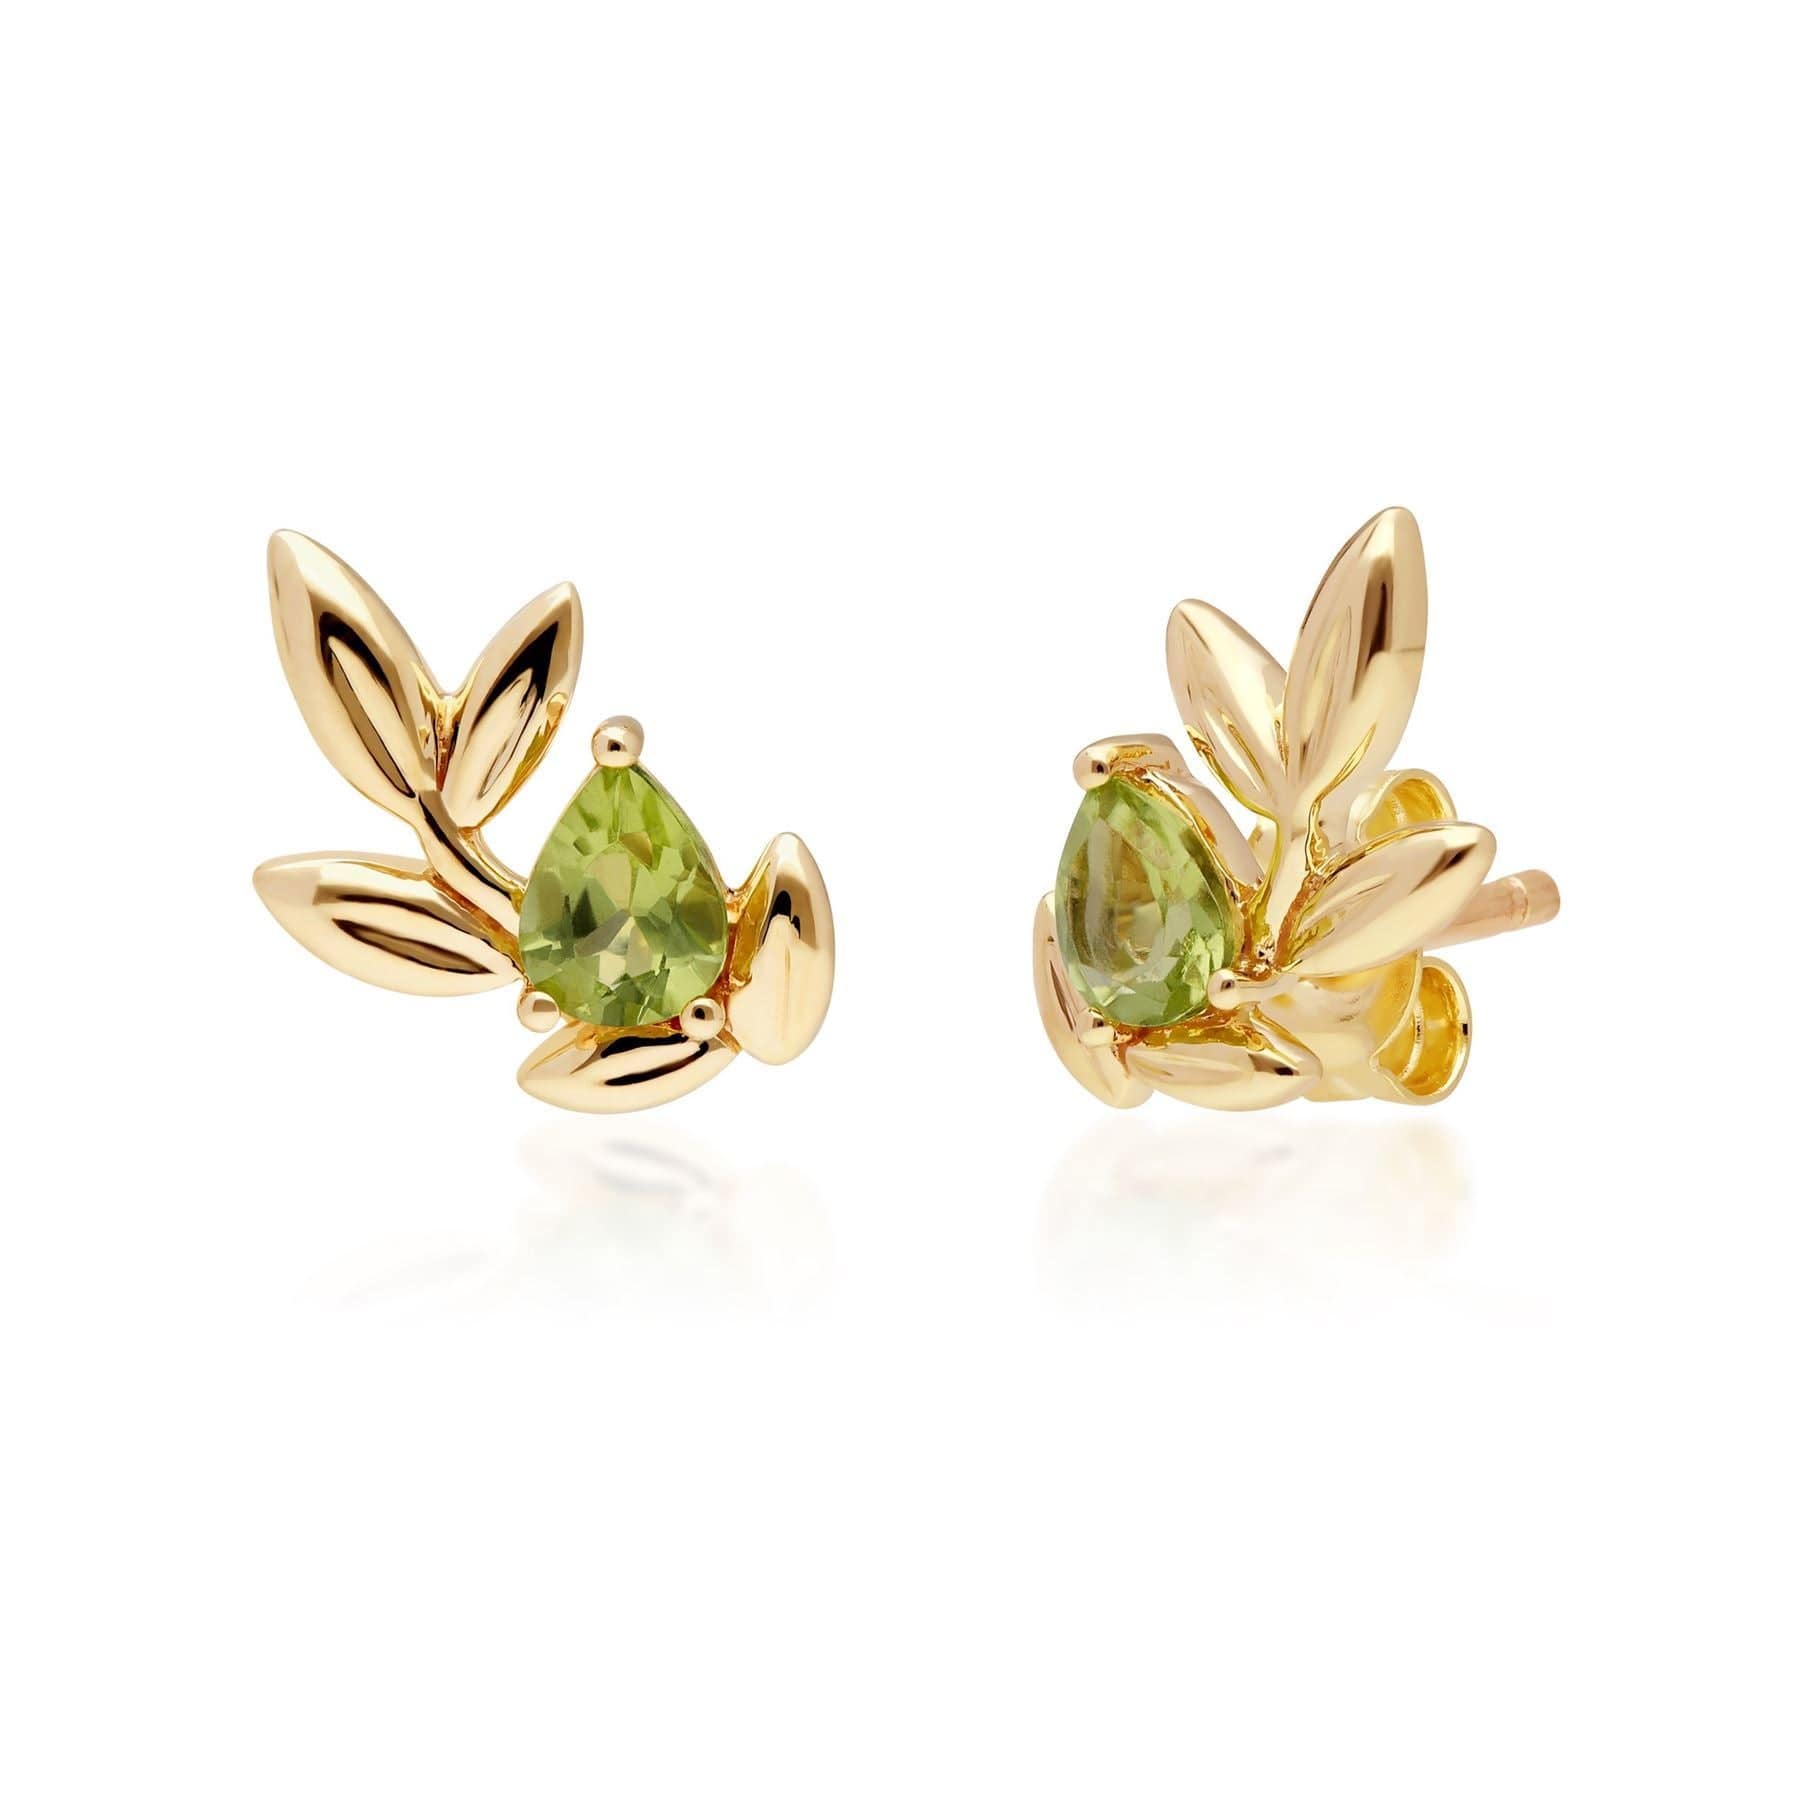 135E1674019-135R1914019 O Leaf Peridot Stud Earring & Ring Set in 9ct Yellow Gold 2